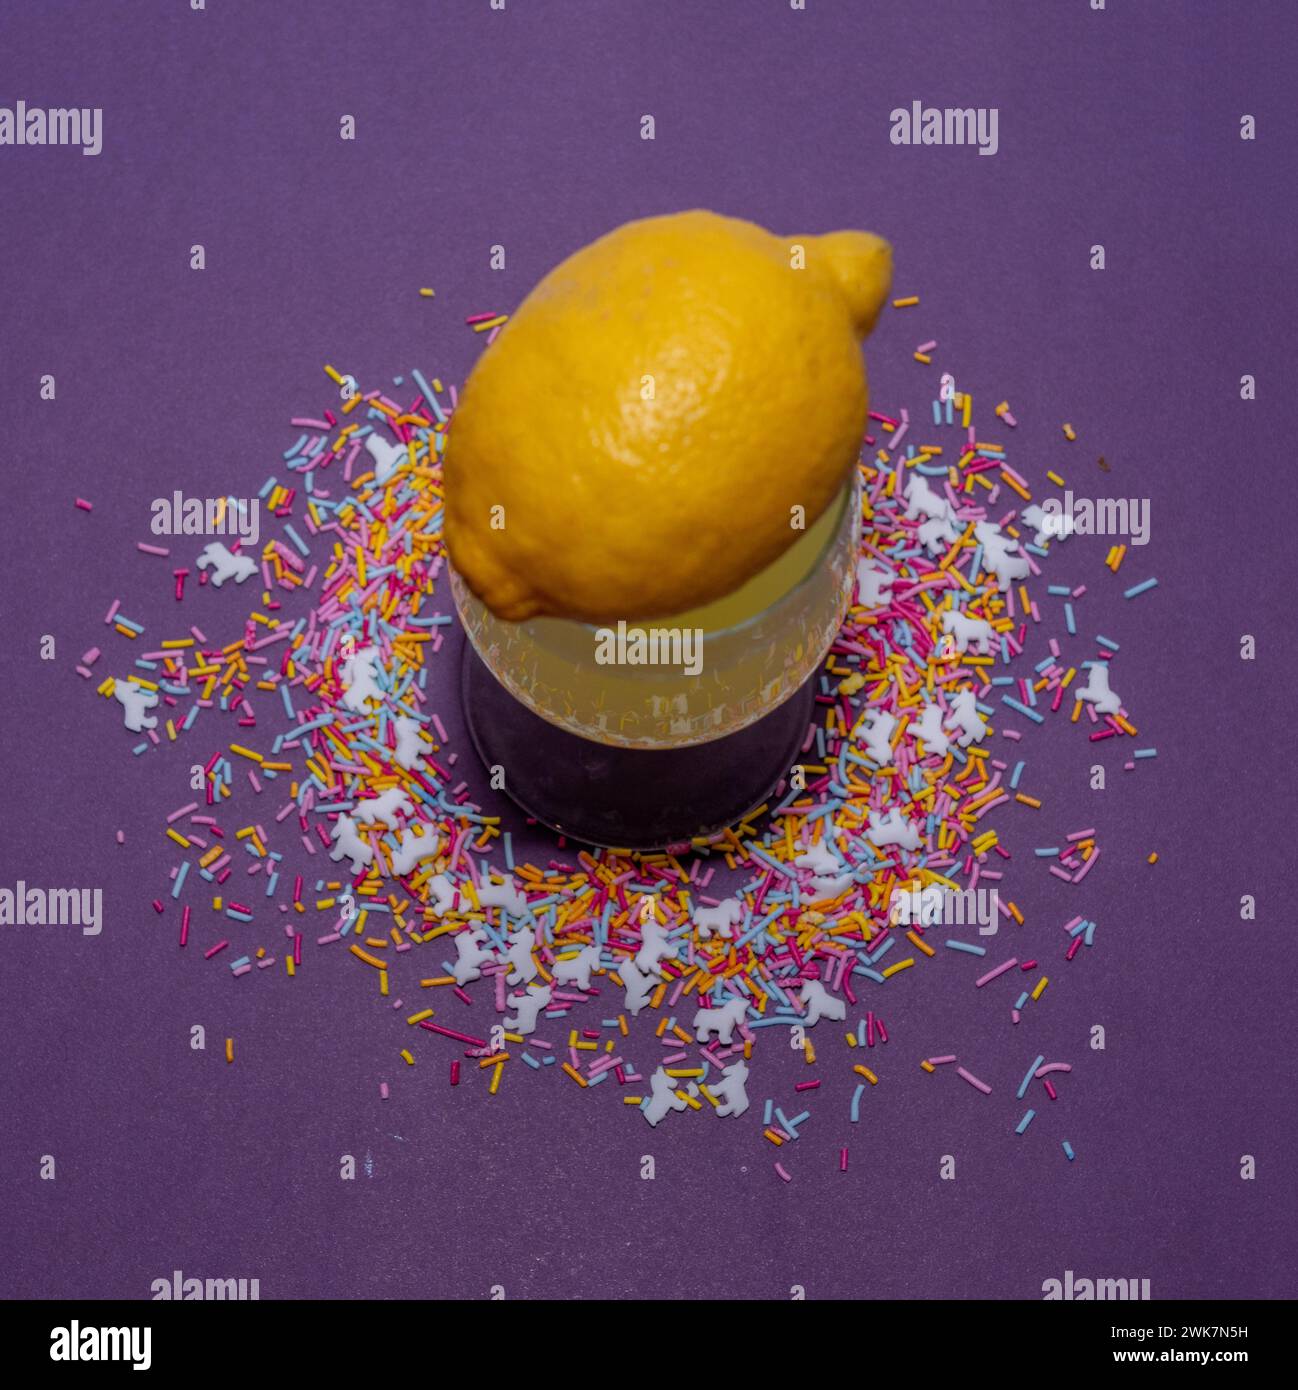 lemon, lemonade and sprinkles creative layout. Food photography. Studio shot. Stock Photo